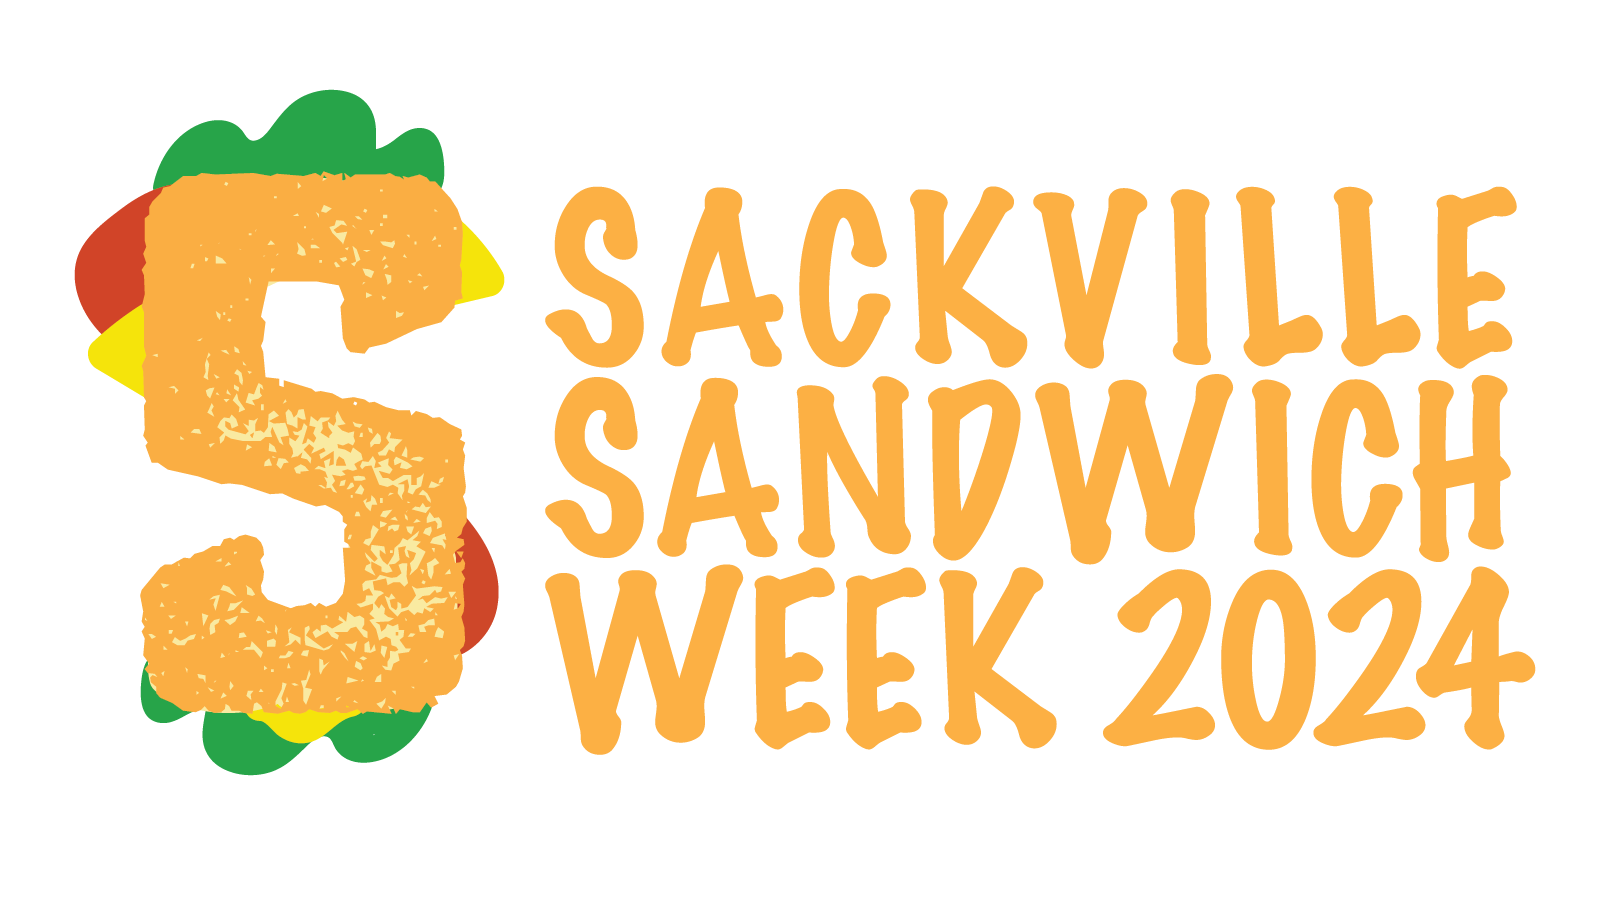 Sackville Sandwich Week 2024